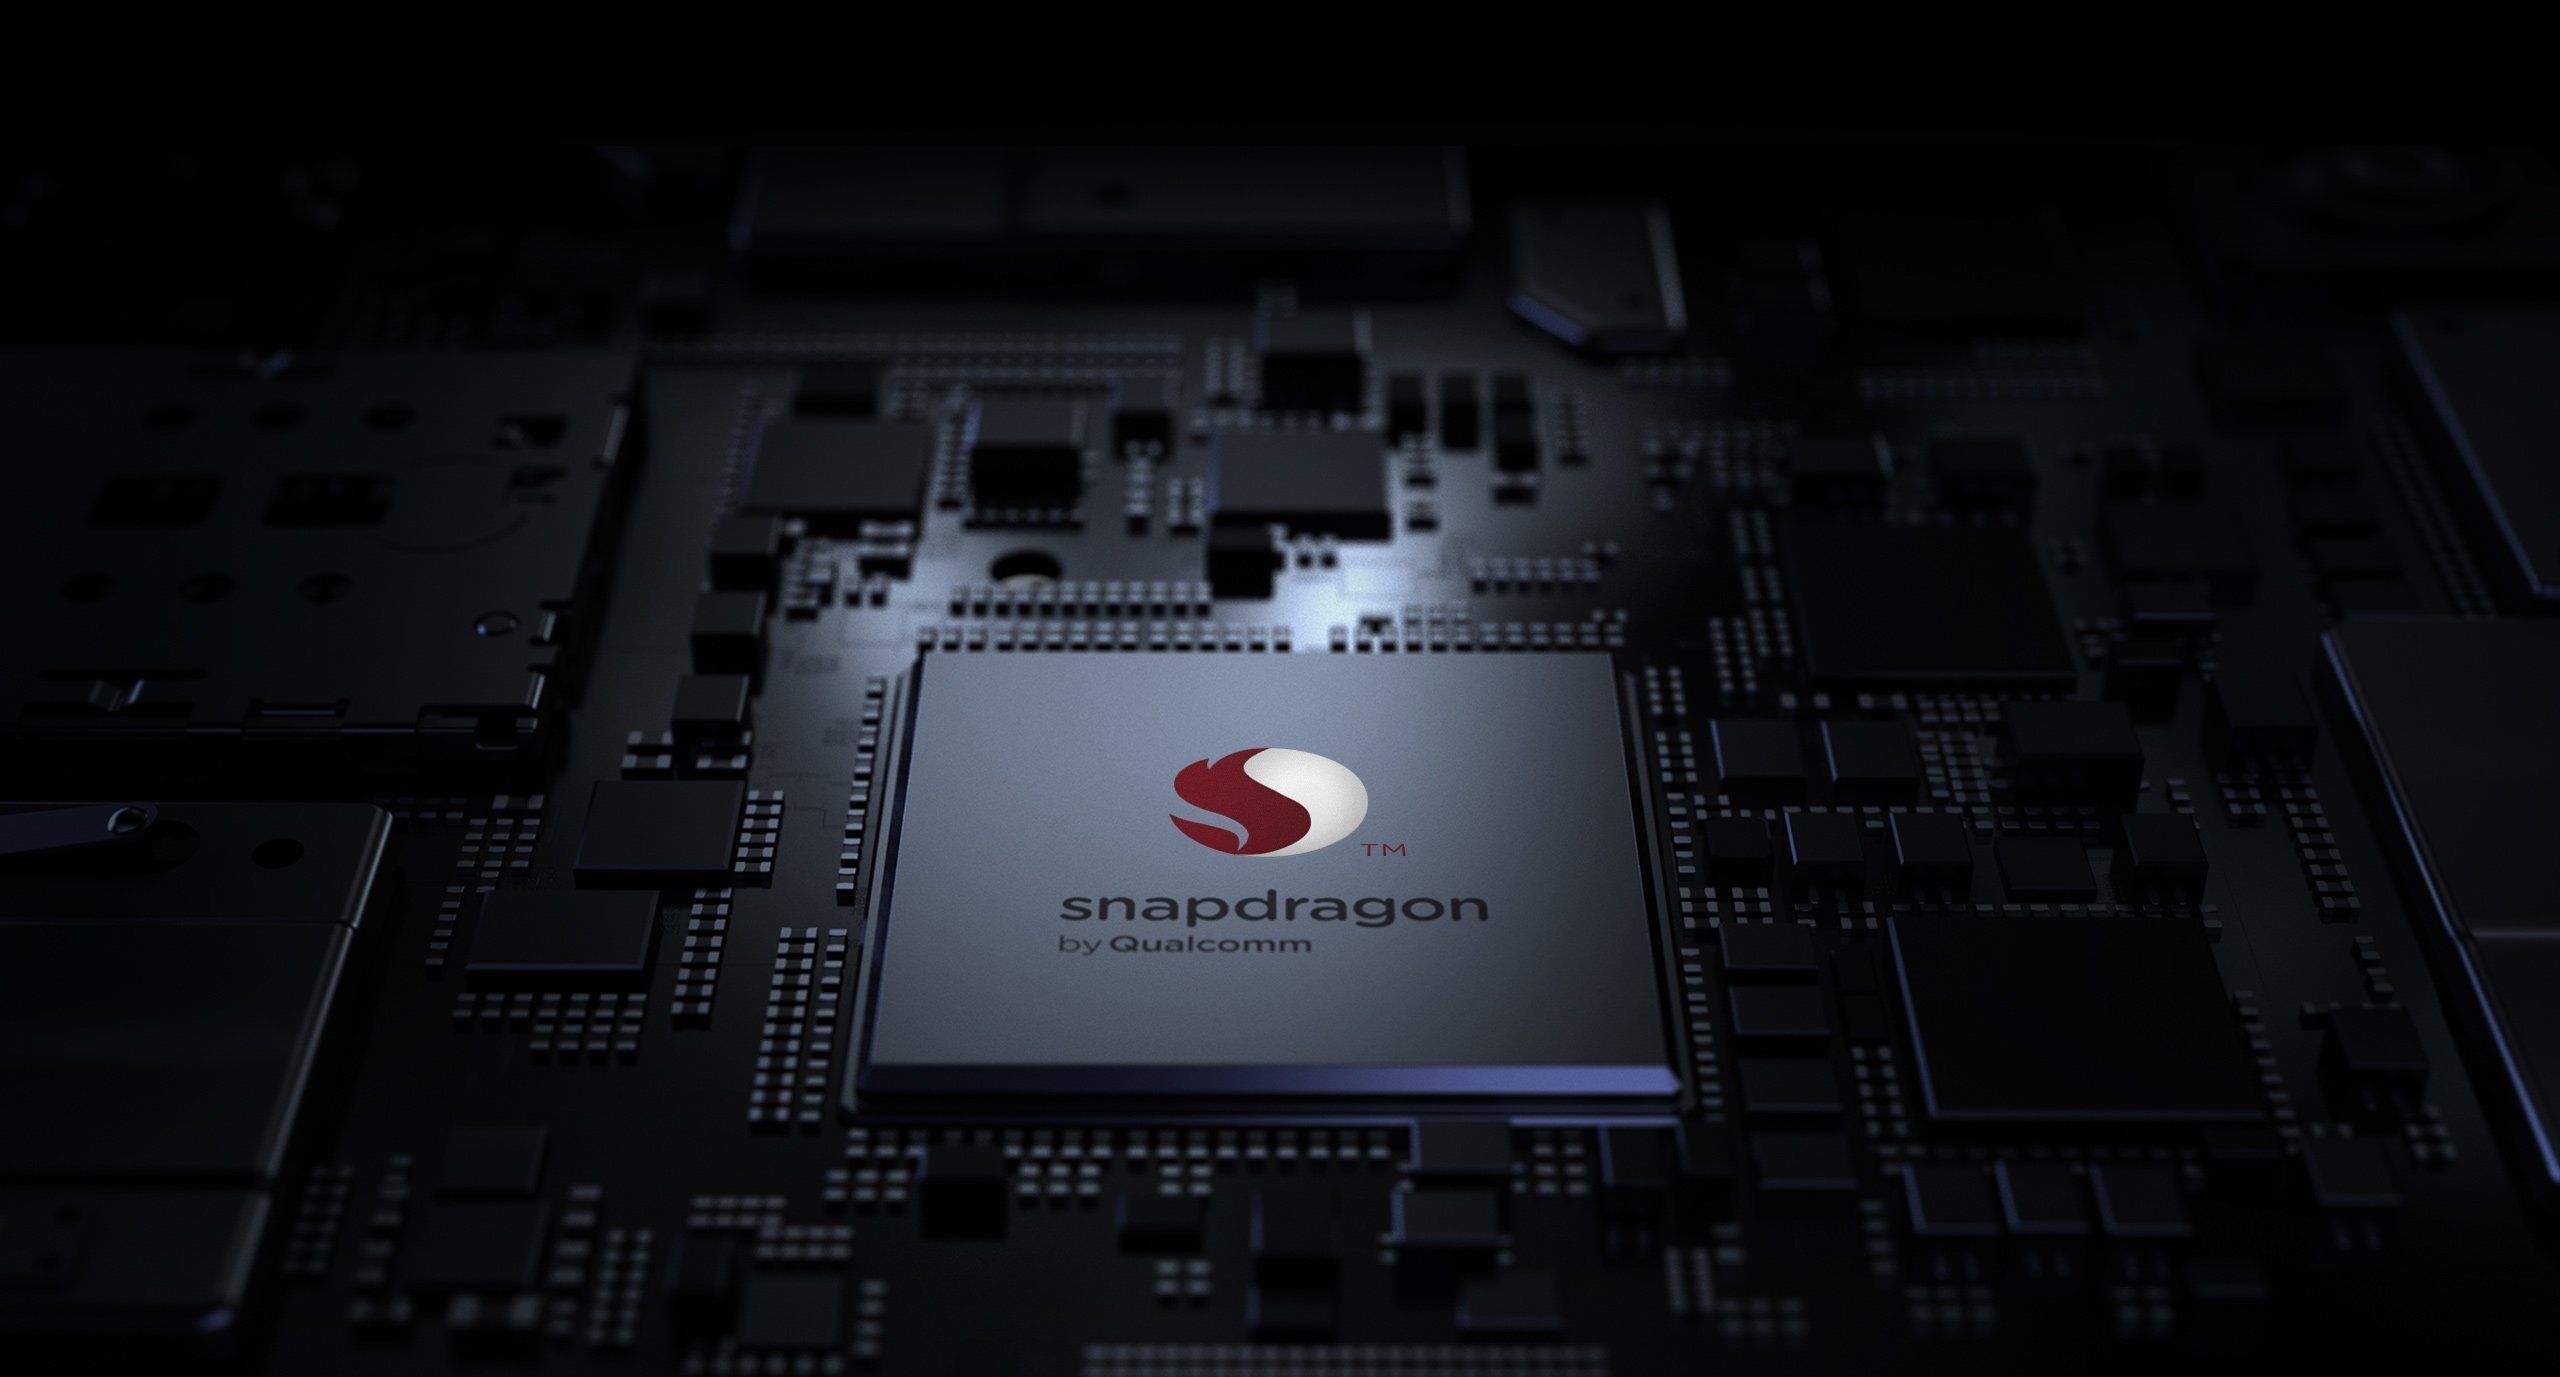 Snapdragon Processor Wallpaper Free Snapdragon Processor Background